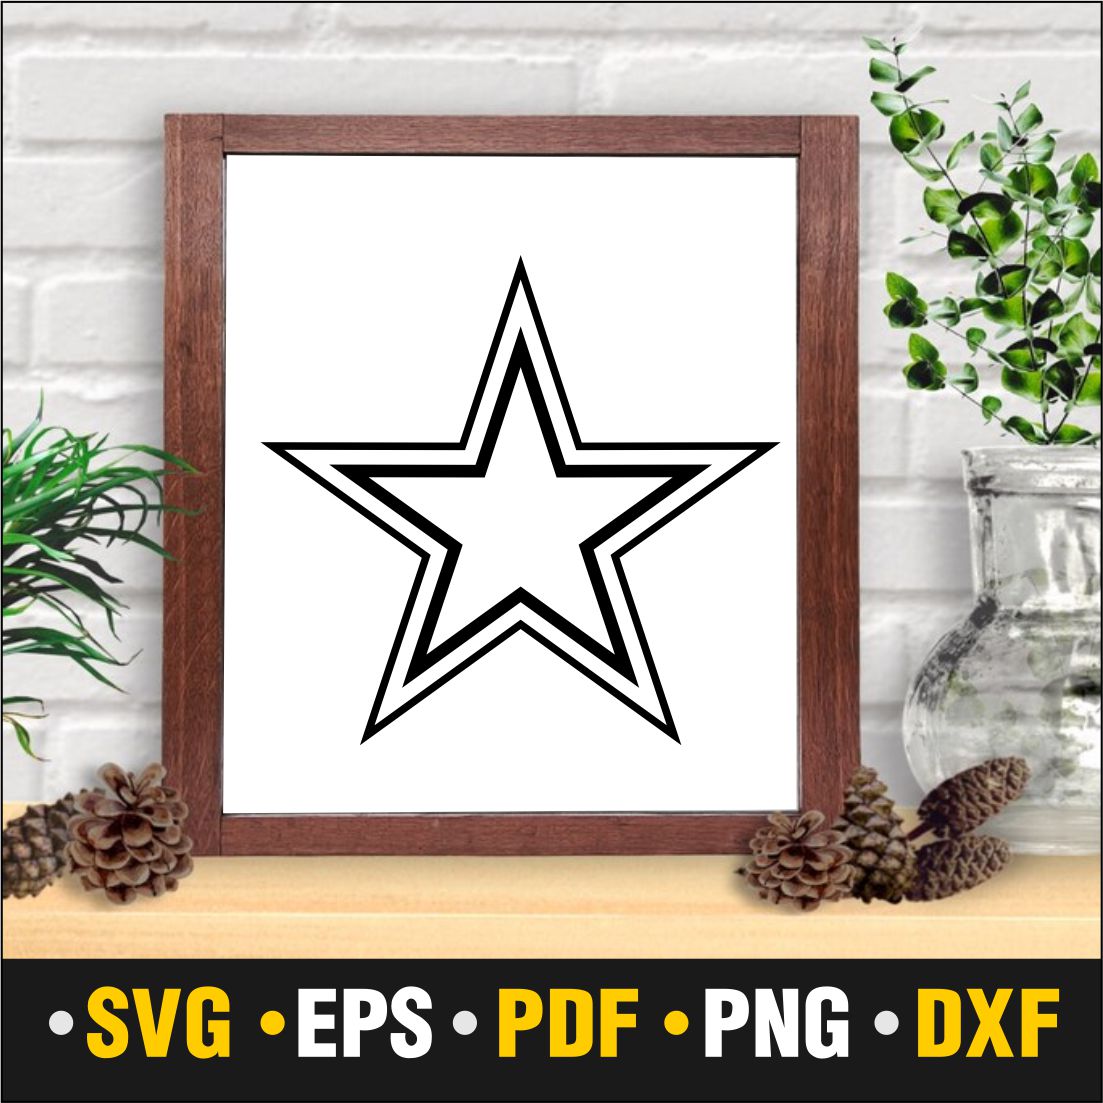 Dallas Cowboys SVG, PDF, PNG, DXF, EPS cover image.